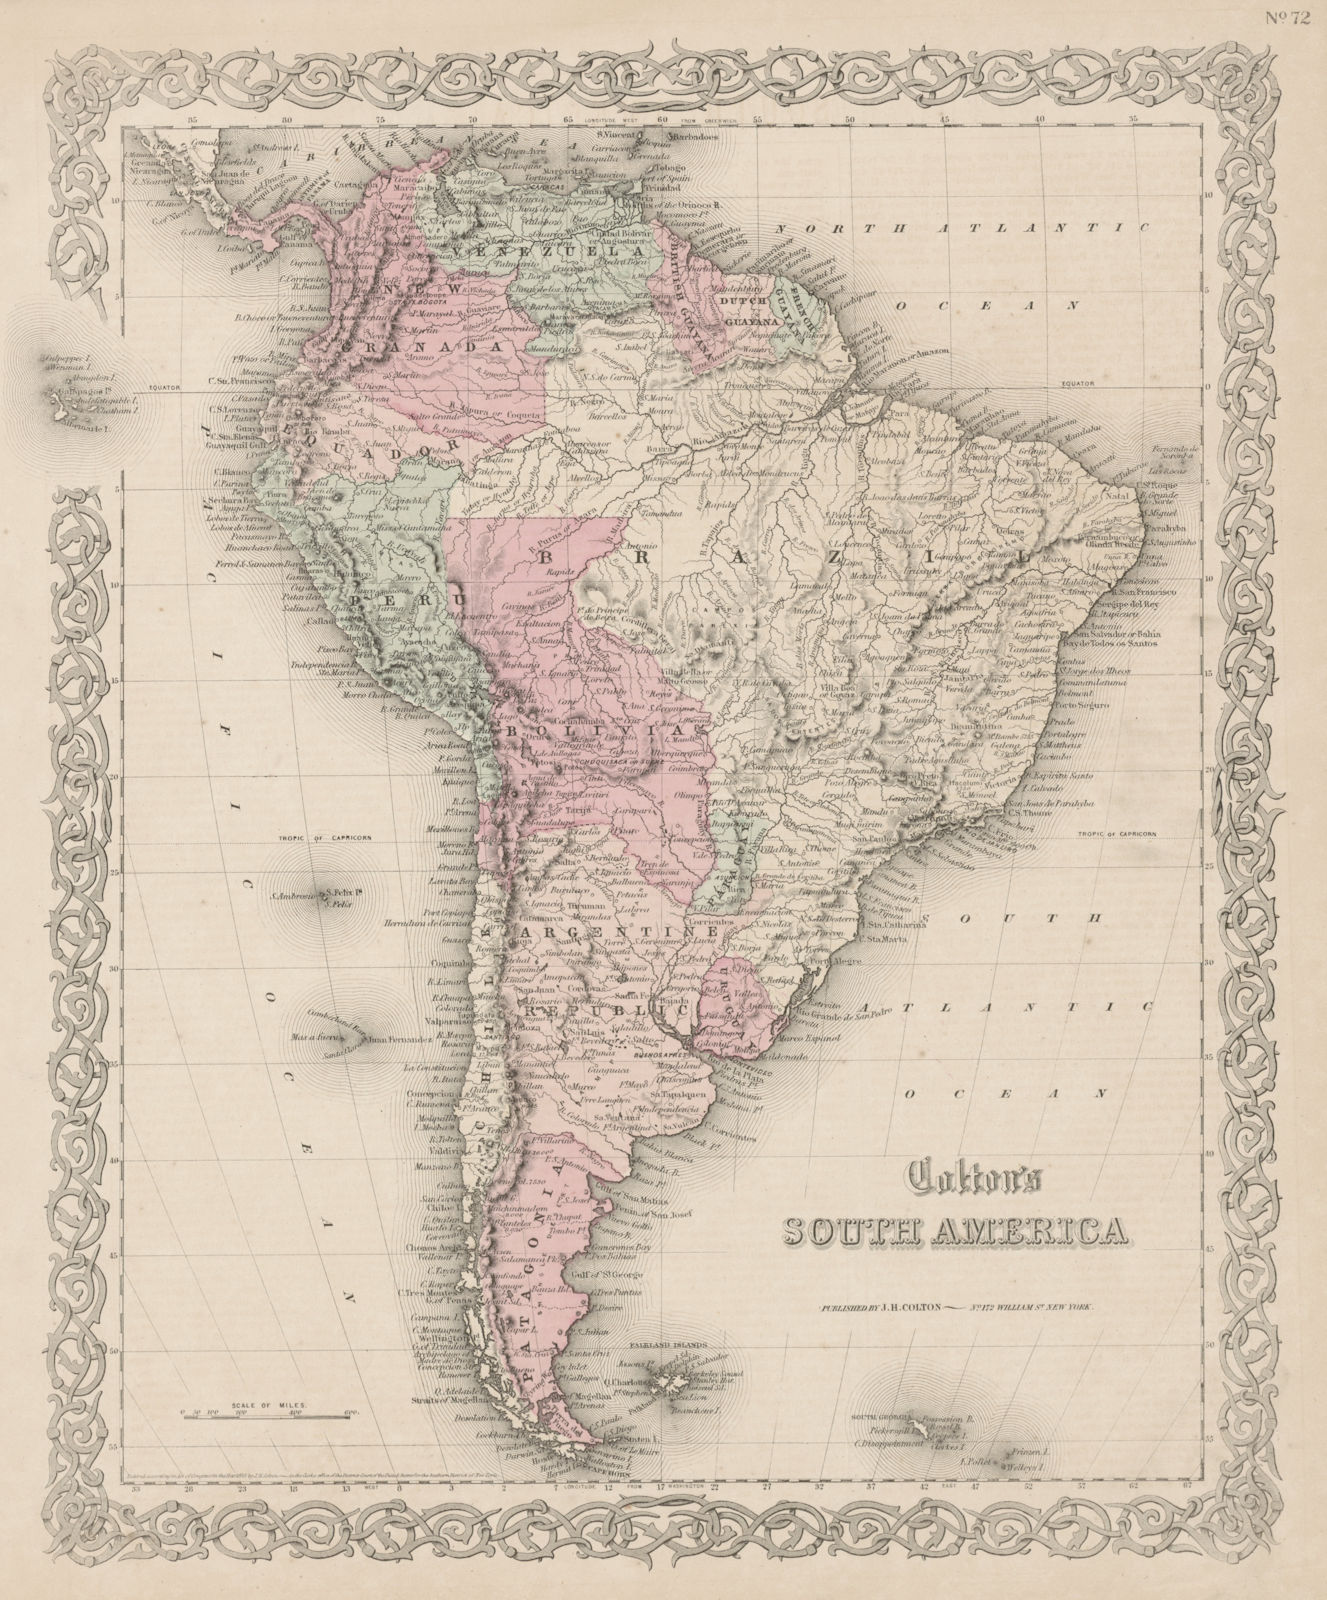 "Colton's South America". Bolivian Litoral. Decorative antique map 1863